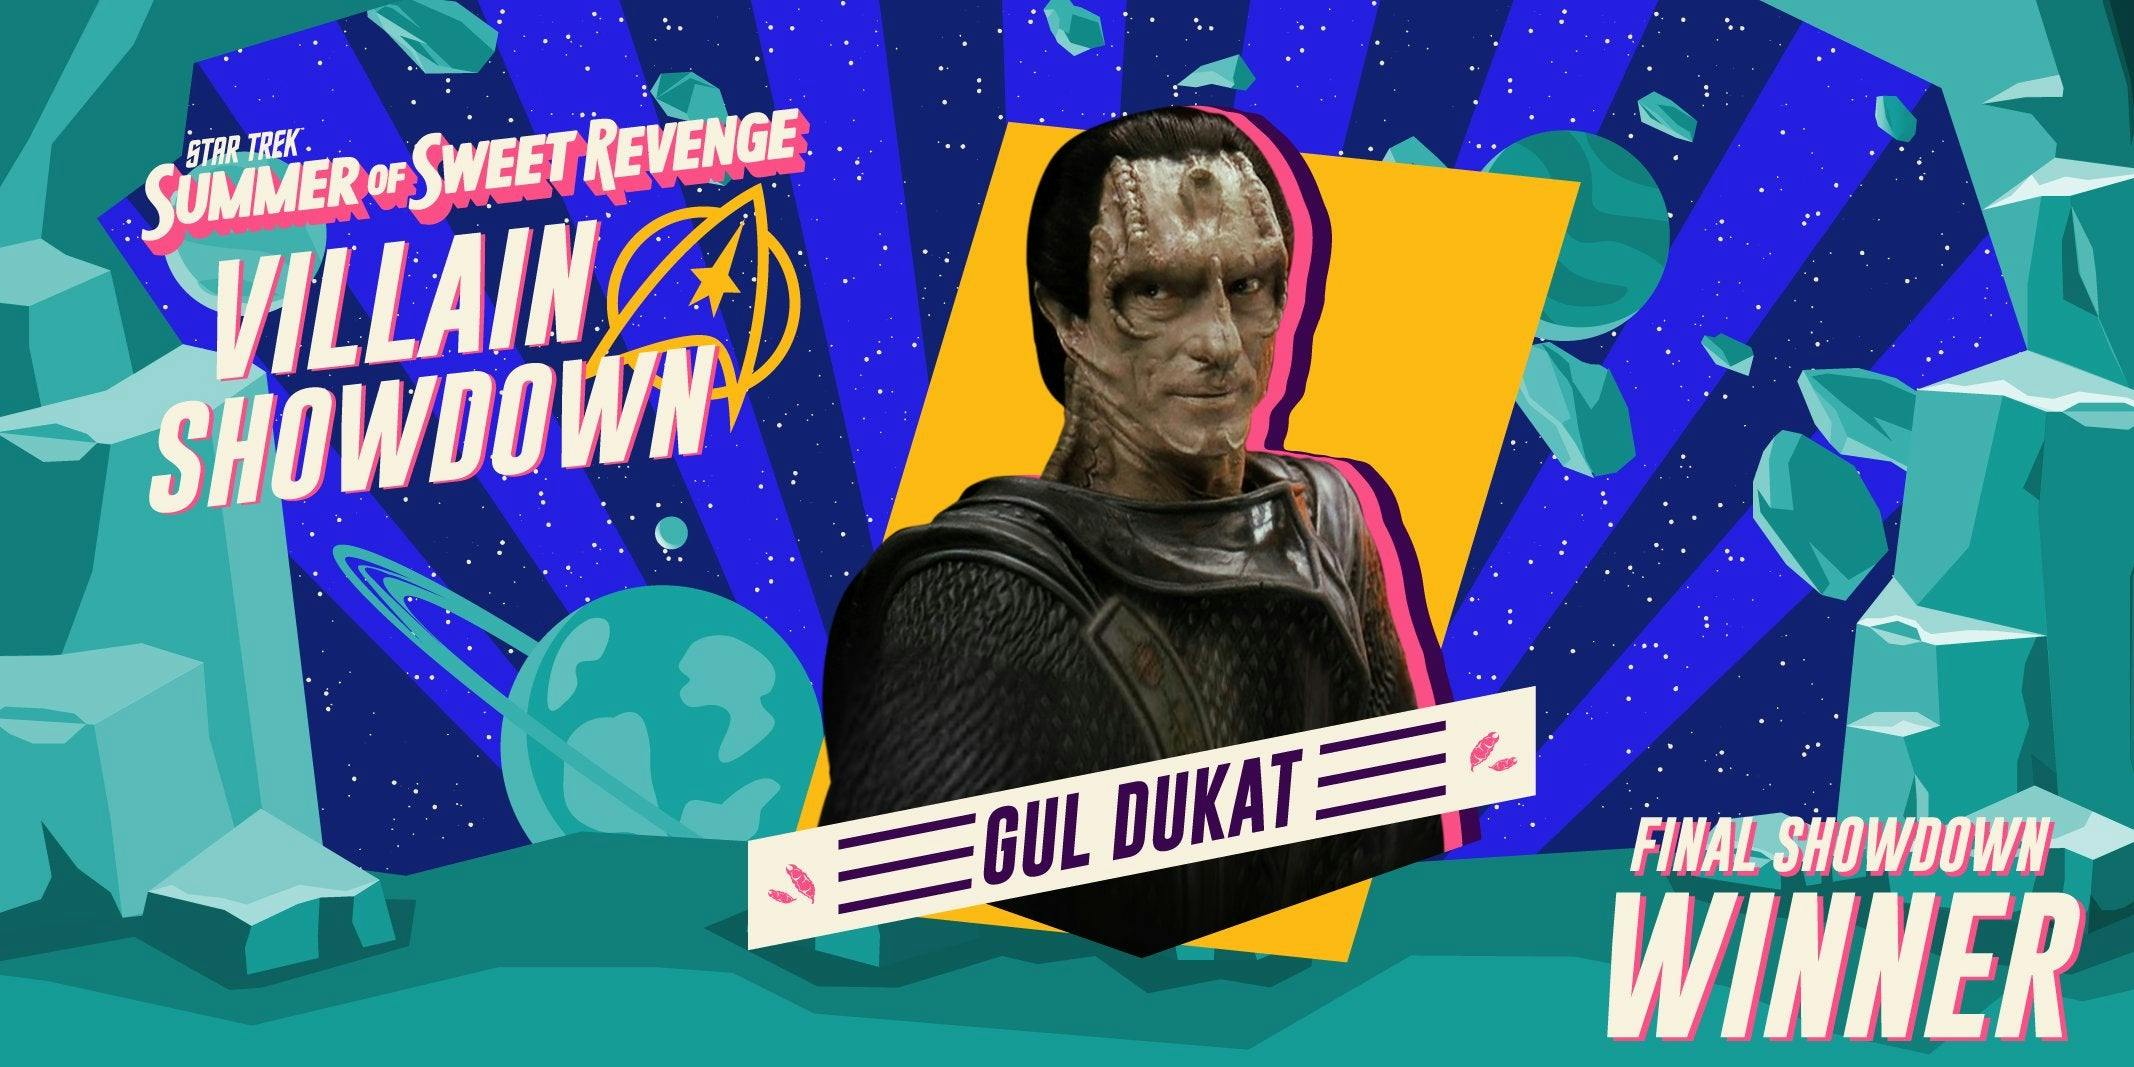 Gul Dukat wins the Star Trek Villain Showdown illustrated banner